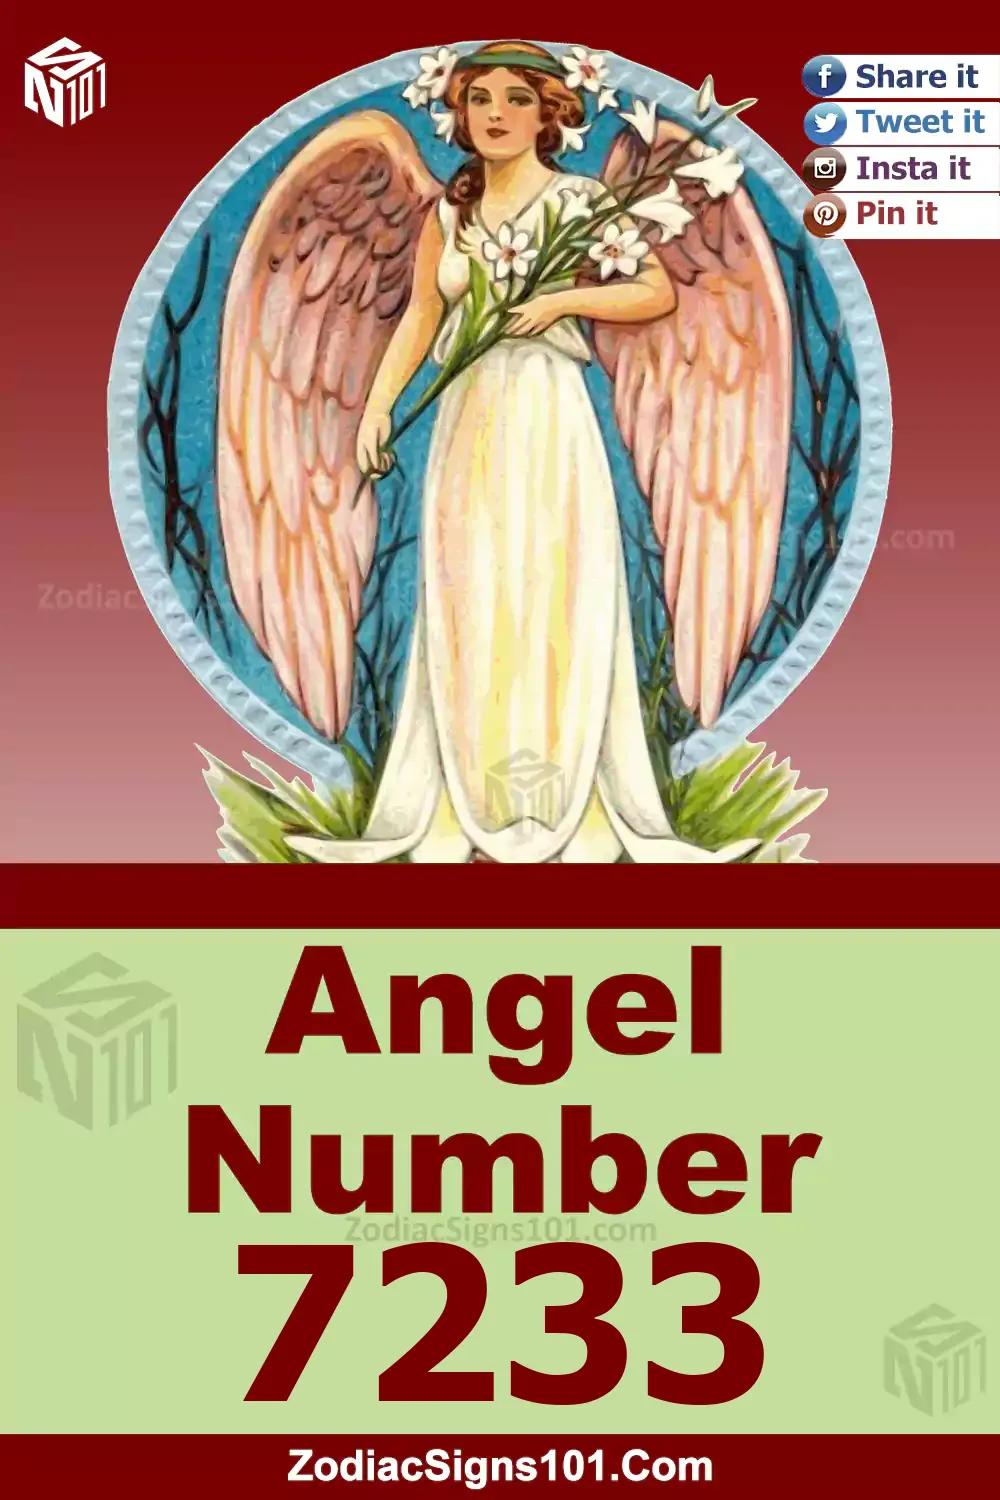 7233-Angel-Number-Meaning.jpg